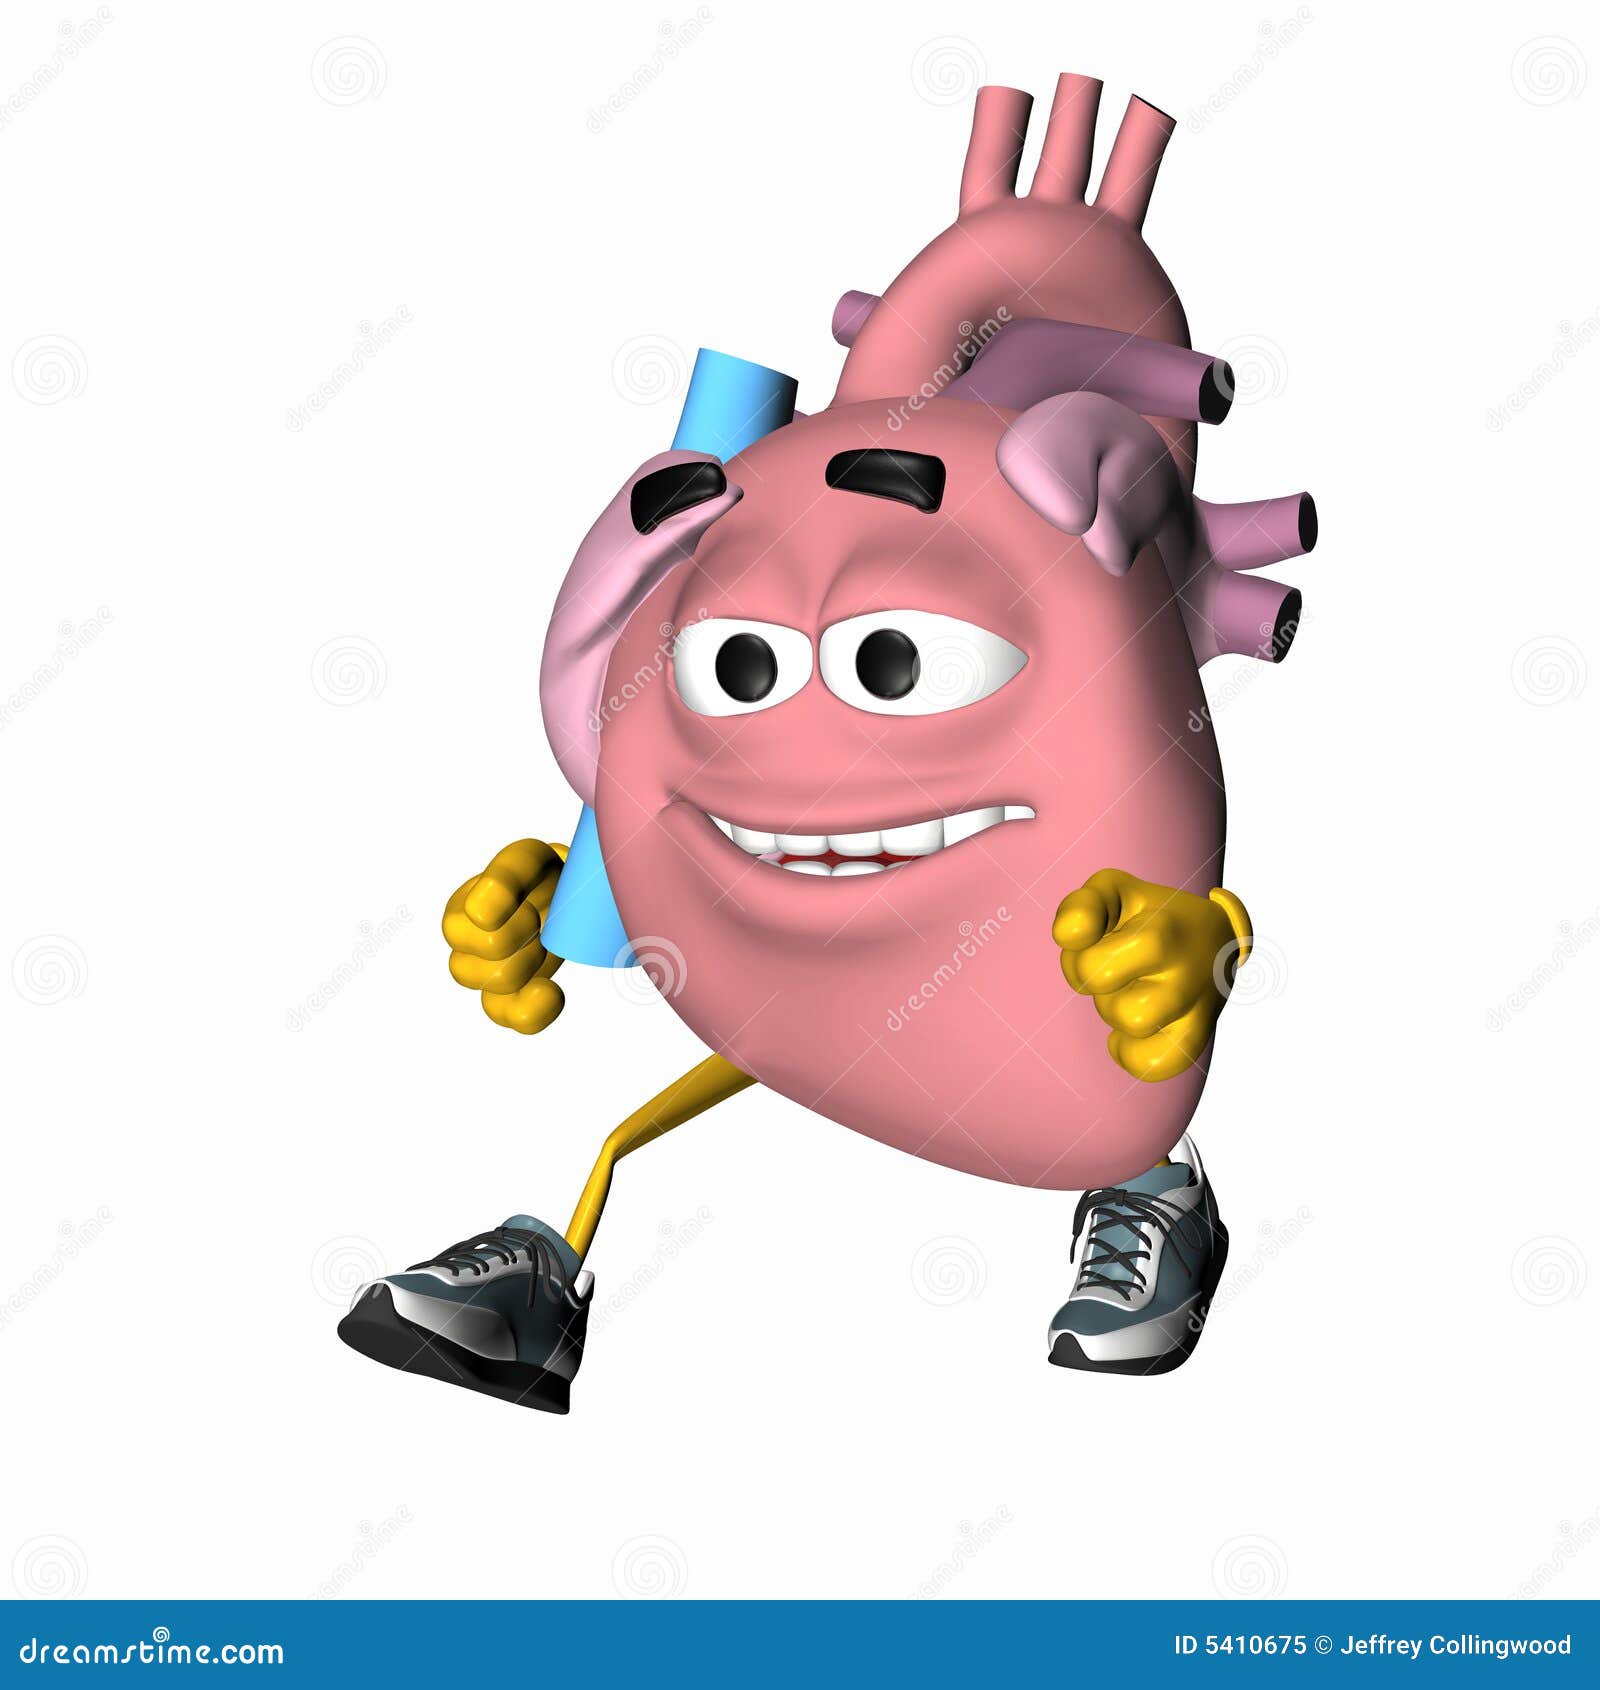 smiley aorta - exercise your heart